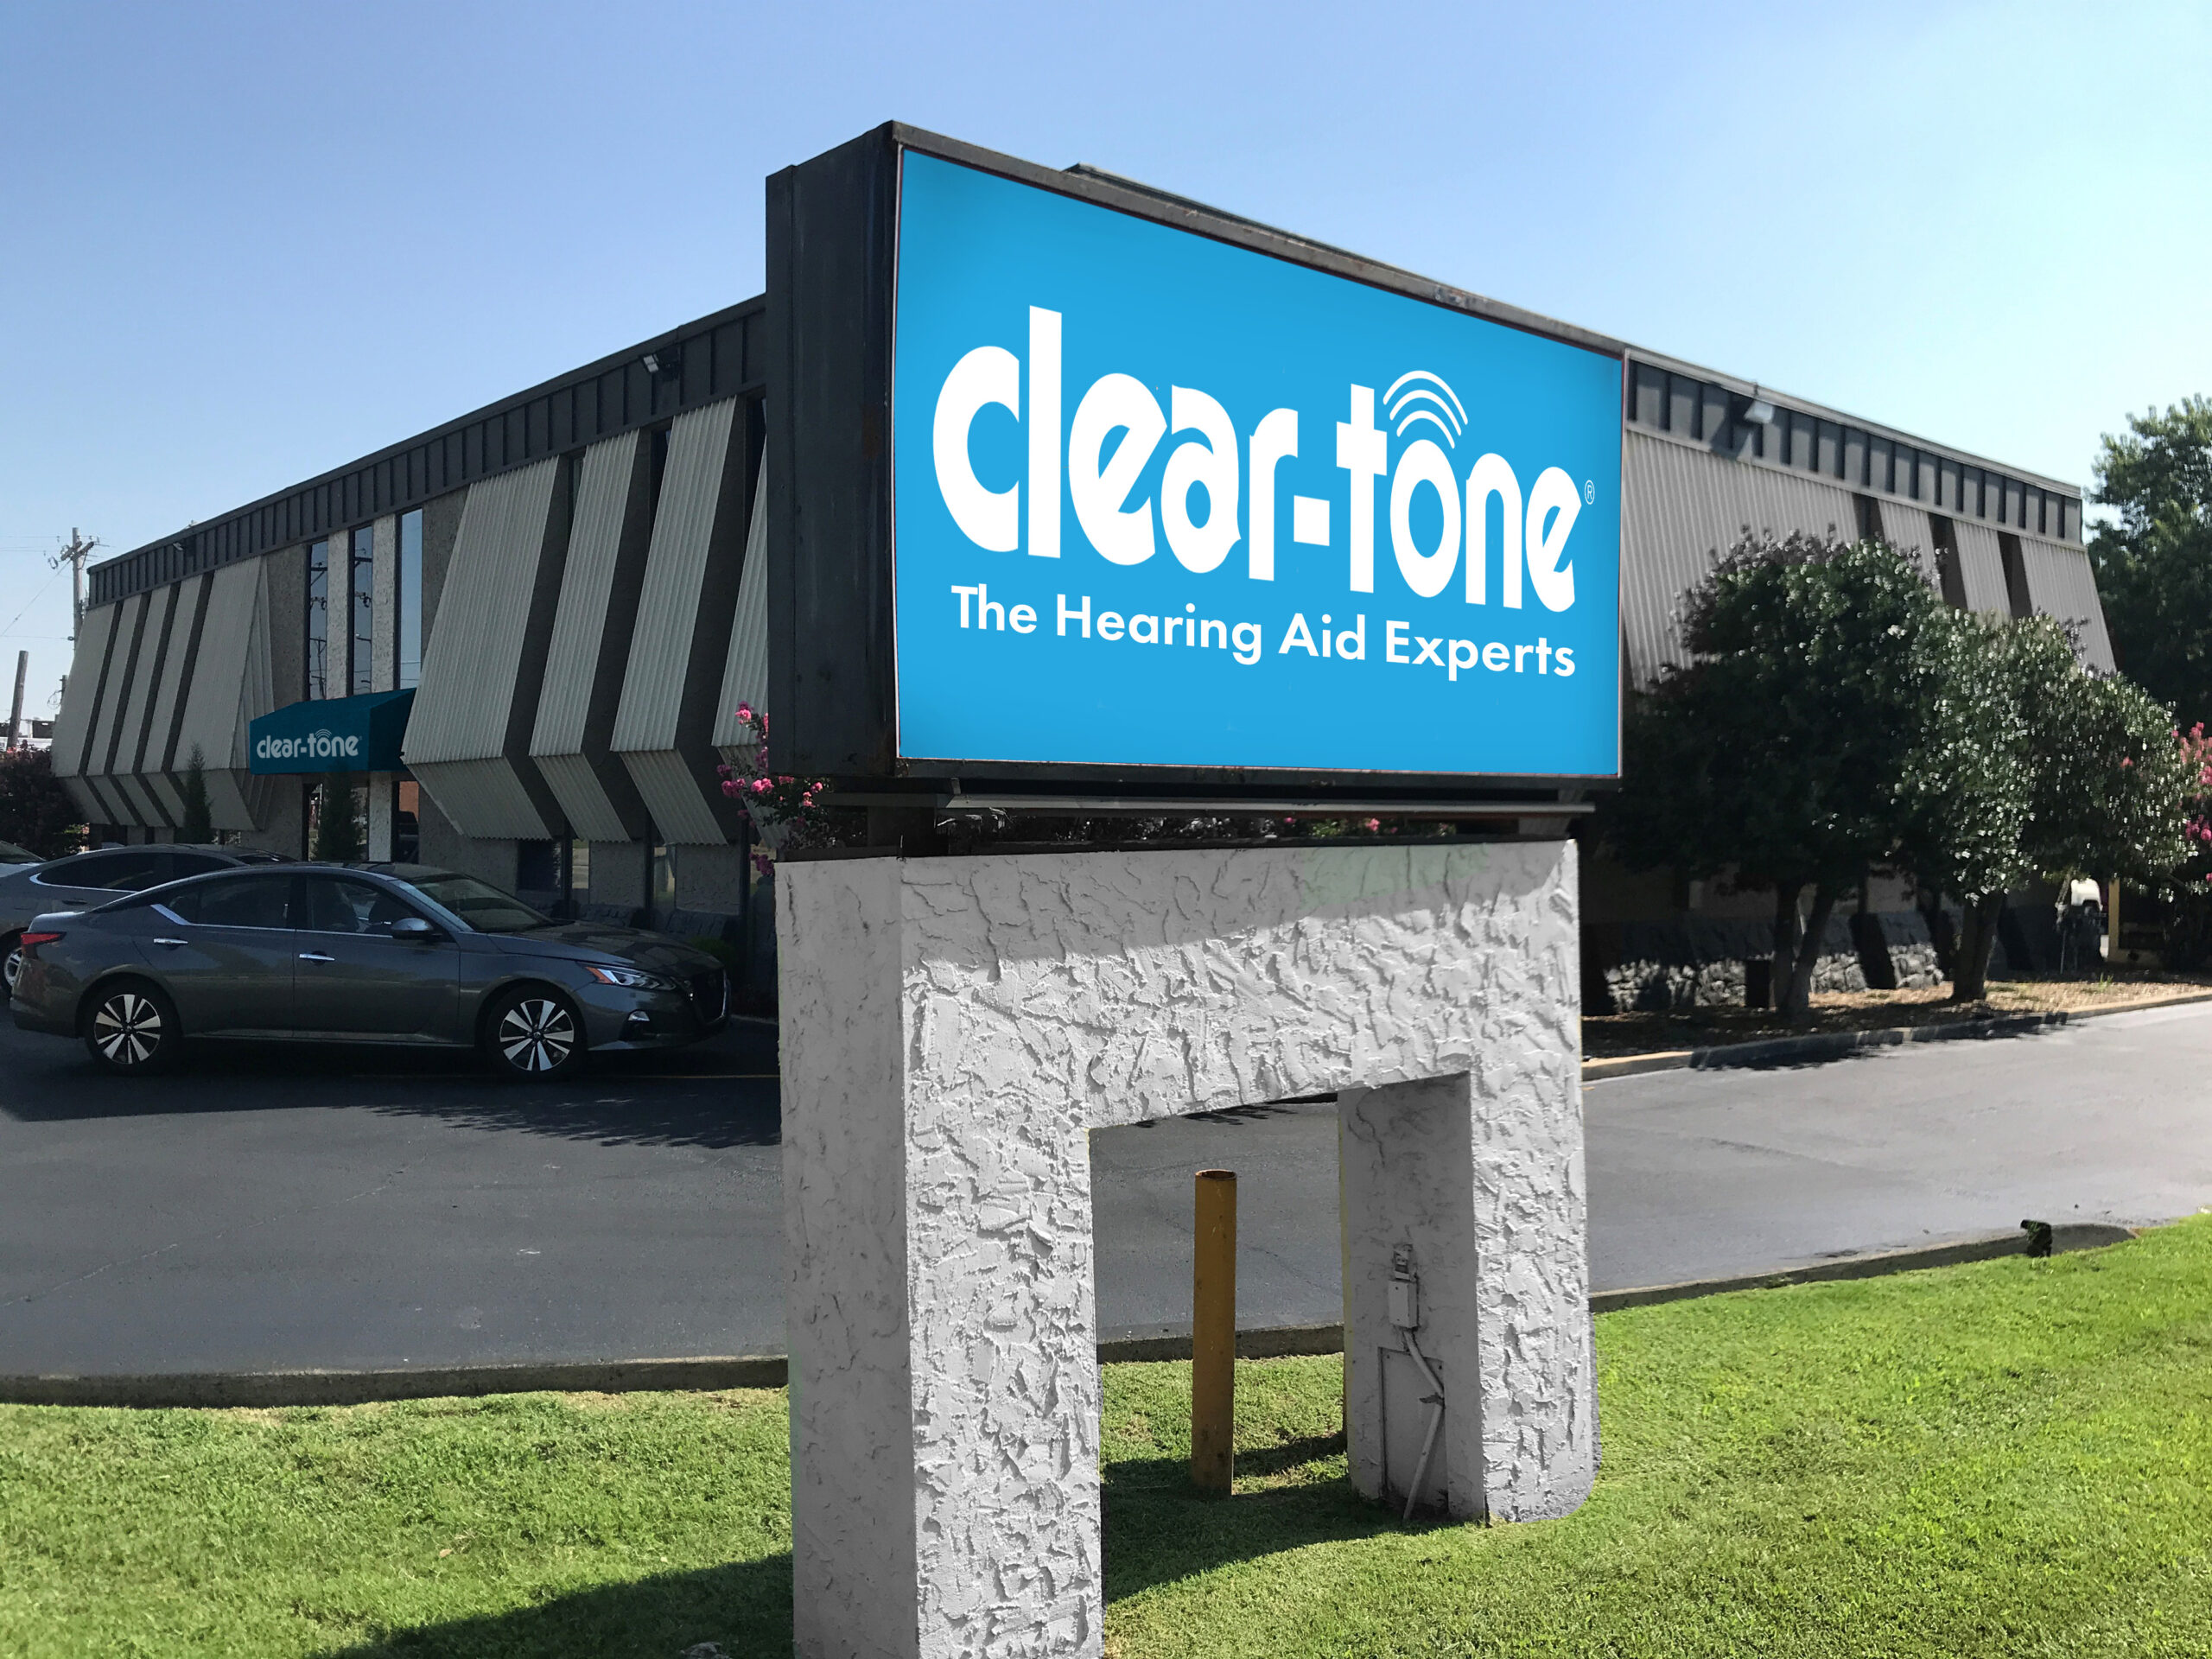 Cleartone building exterior